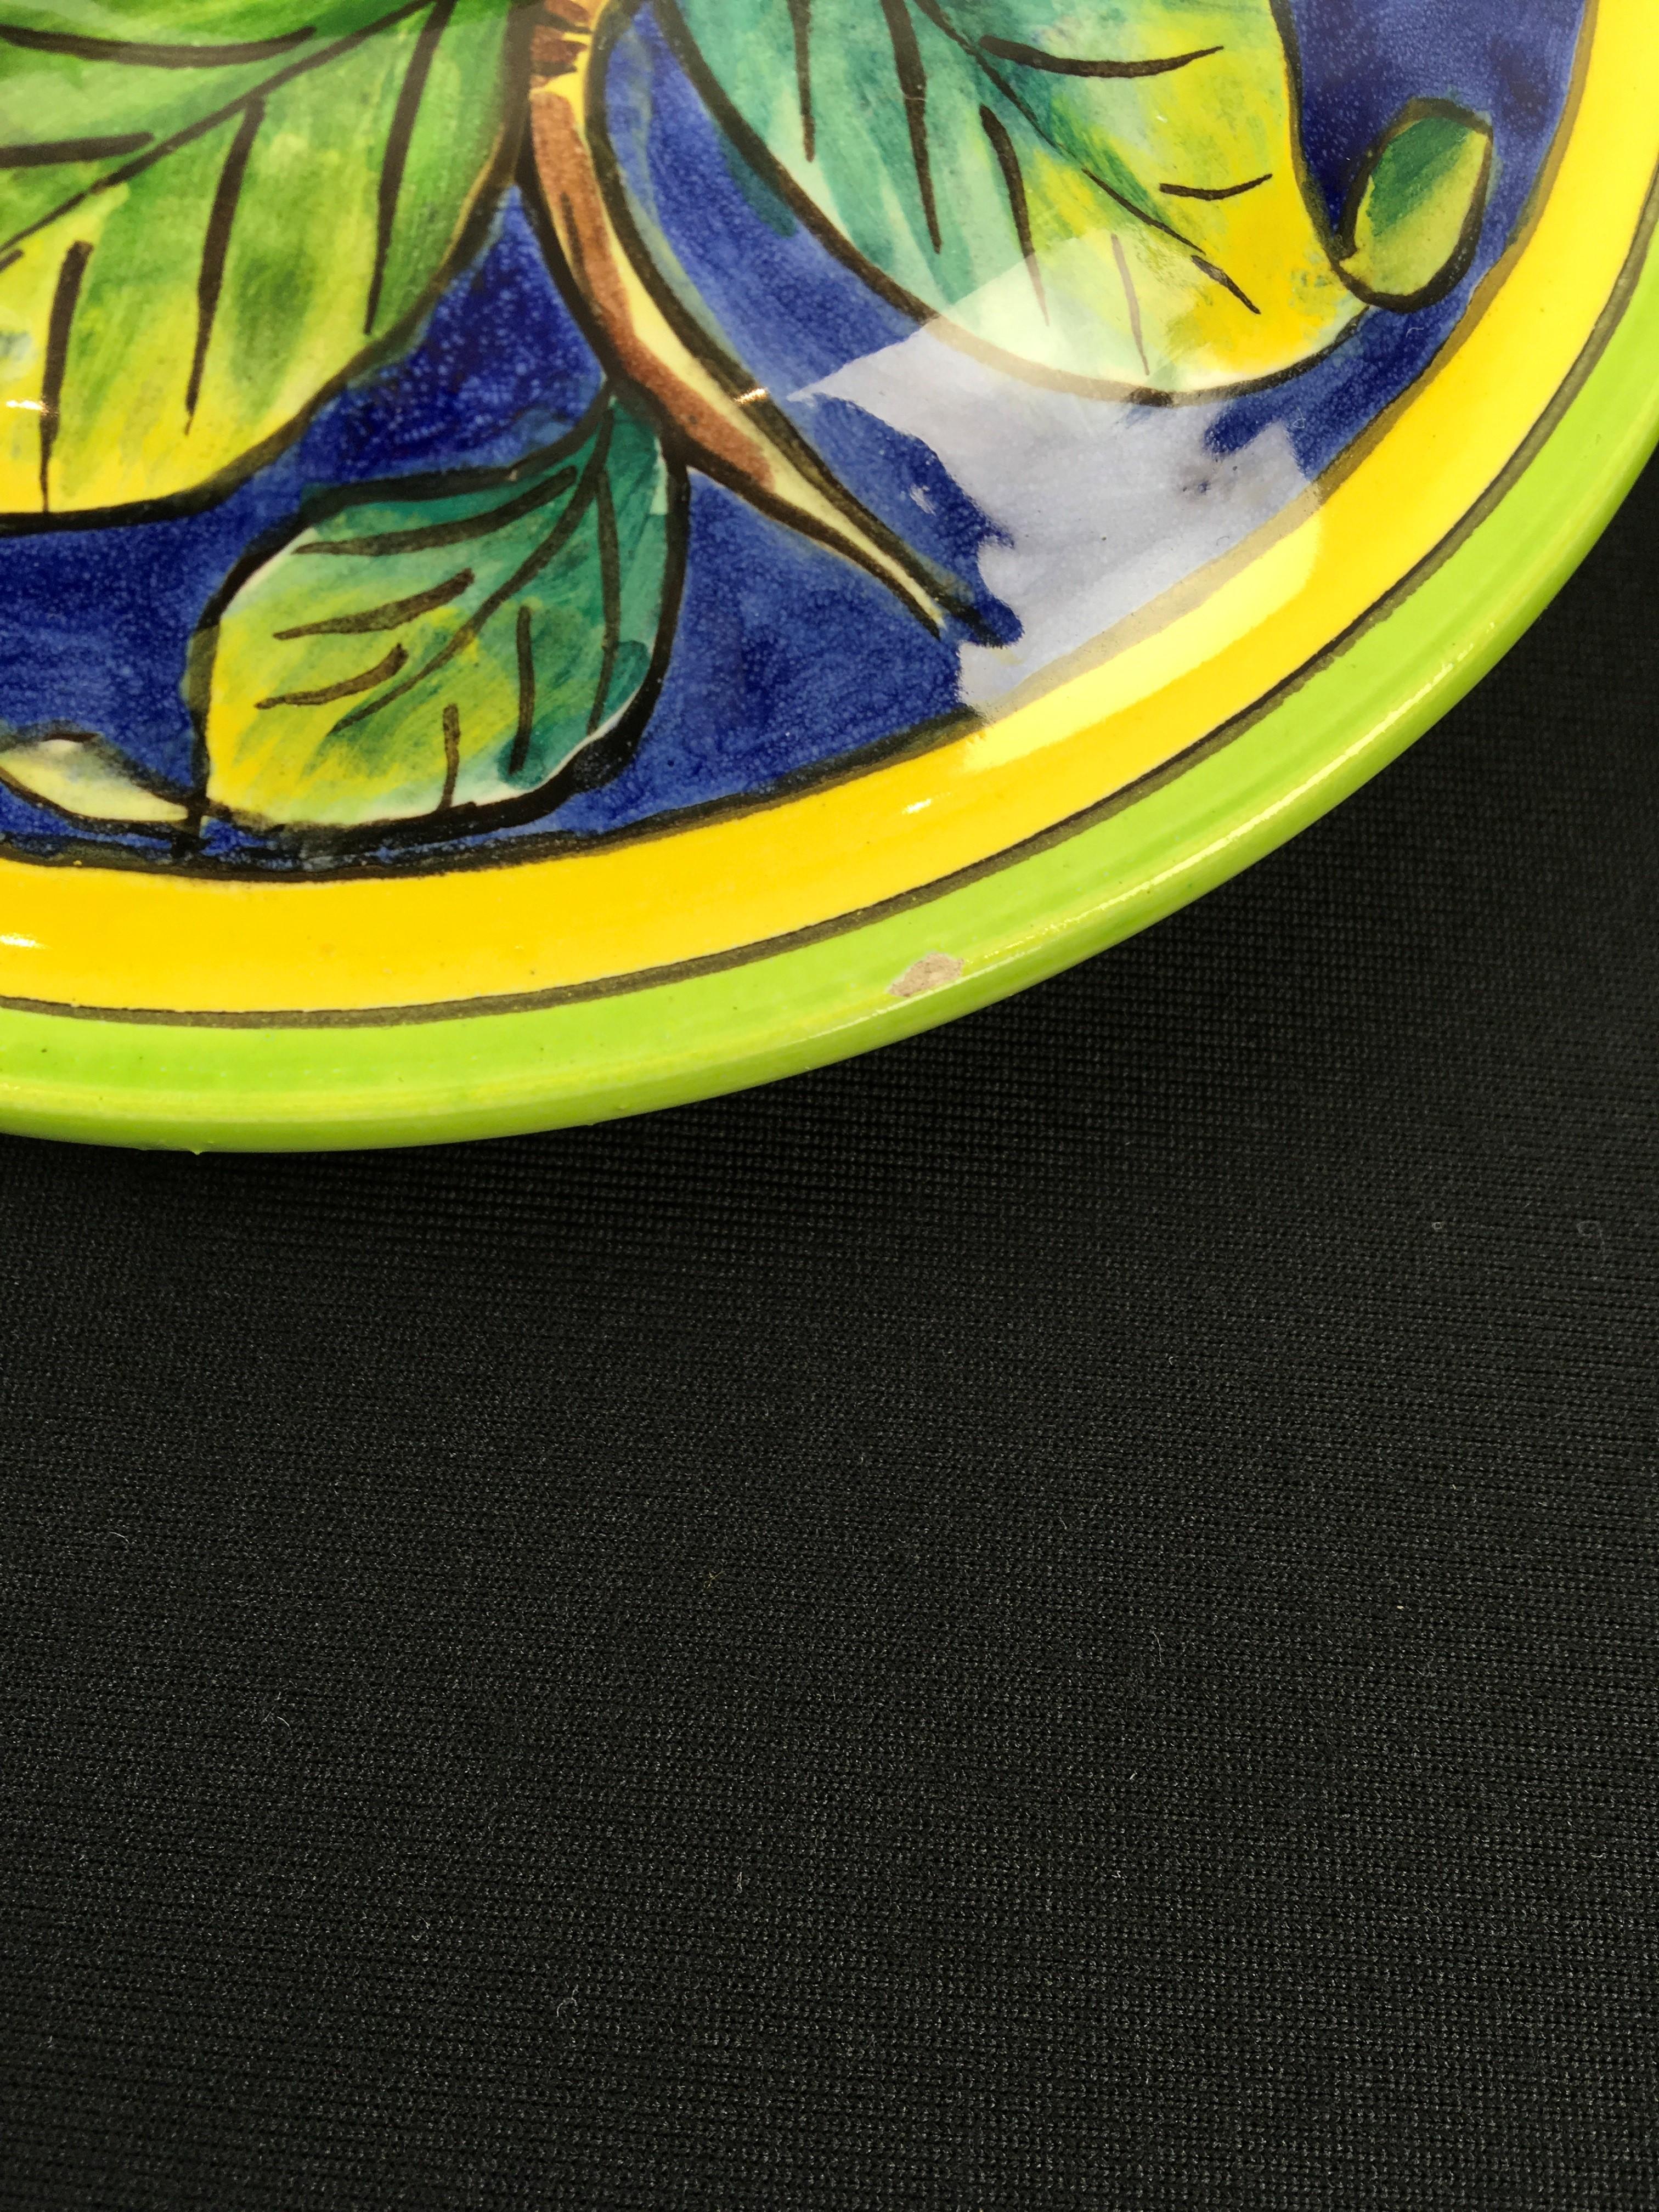 Glazed Blue Ceramic Jar with Bird, Lemons and Lid For Sale 9